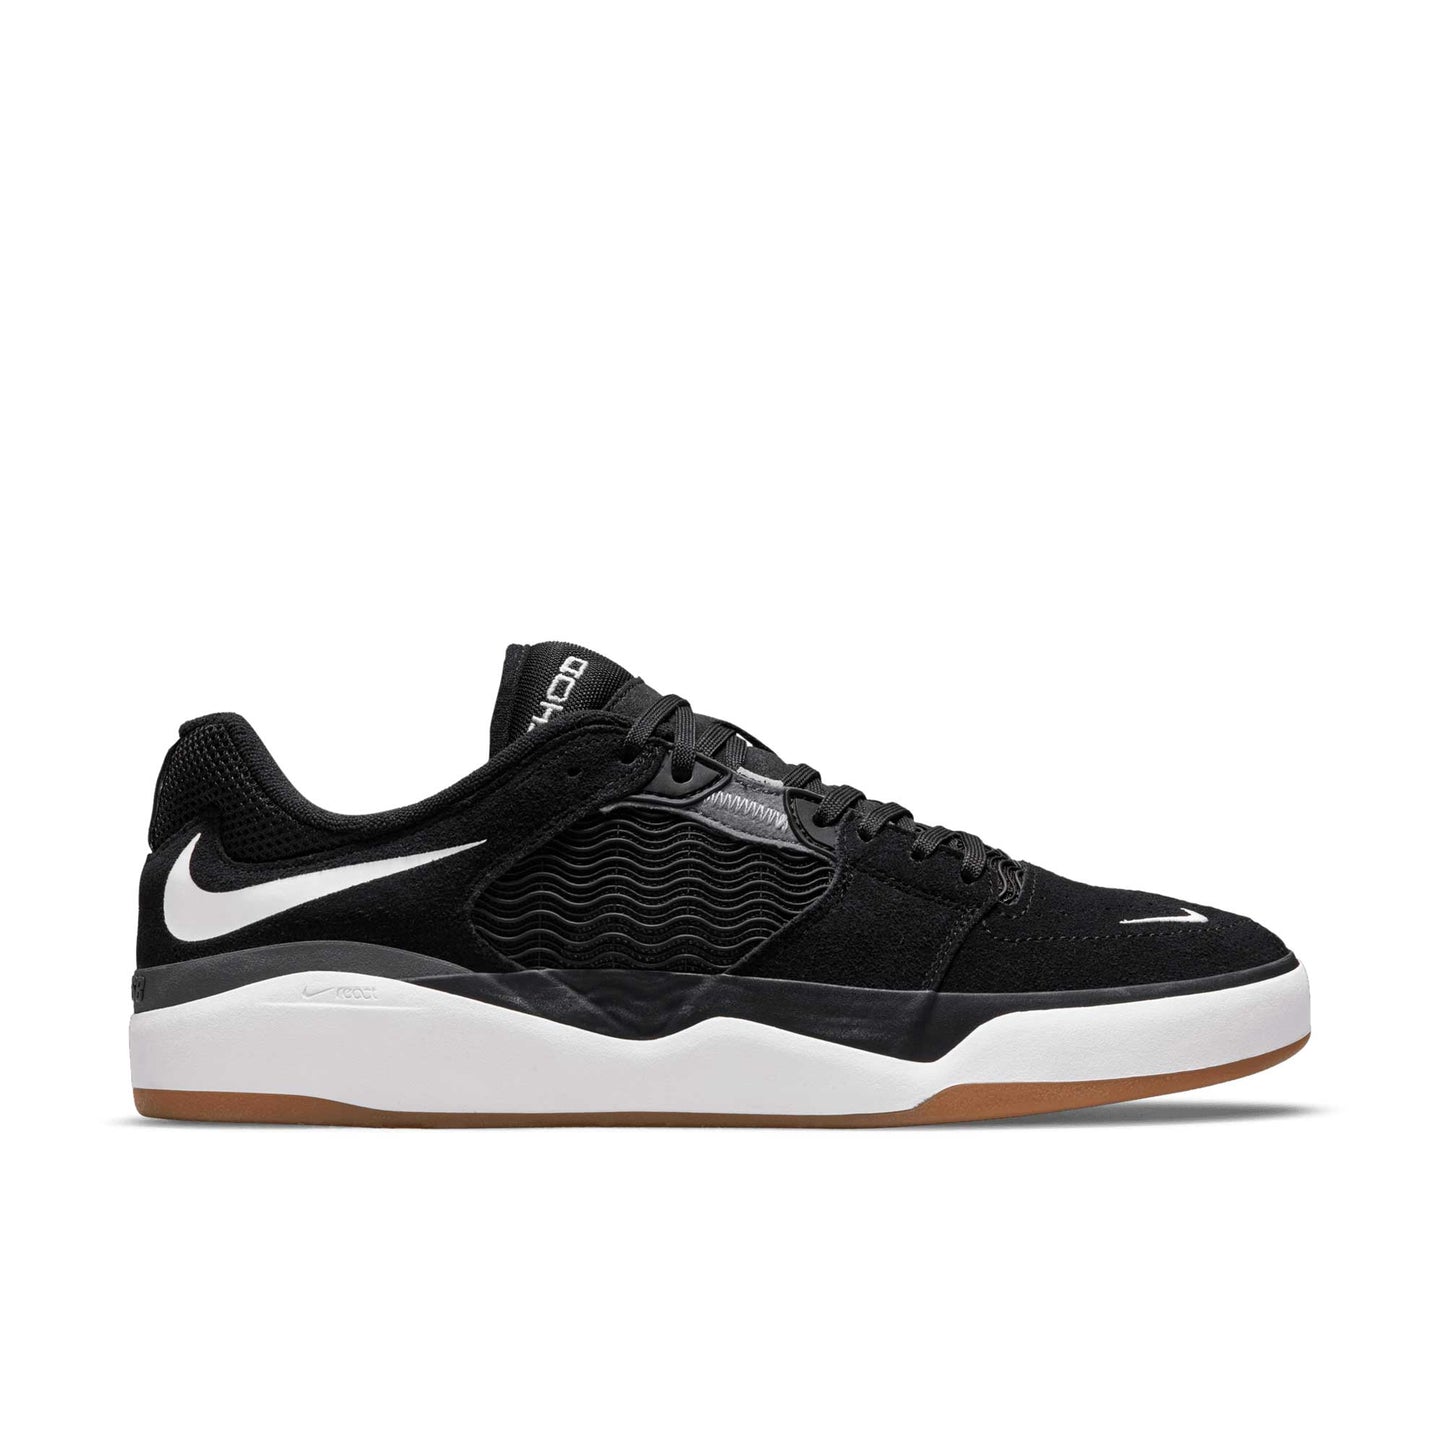 Nike SB Ishod Wair, black/white-dark grey-black - Tiki Room Skateboards - 1